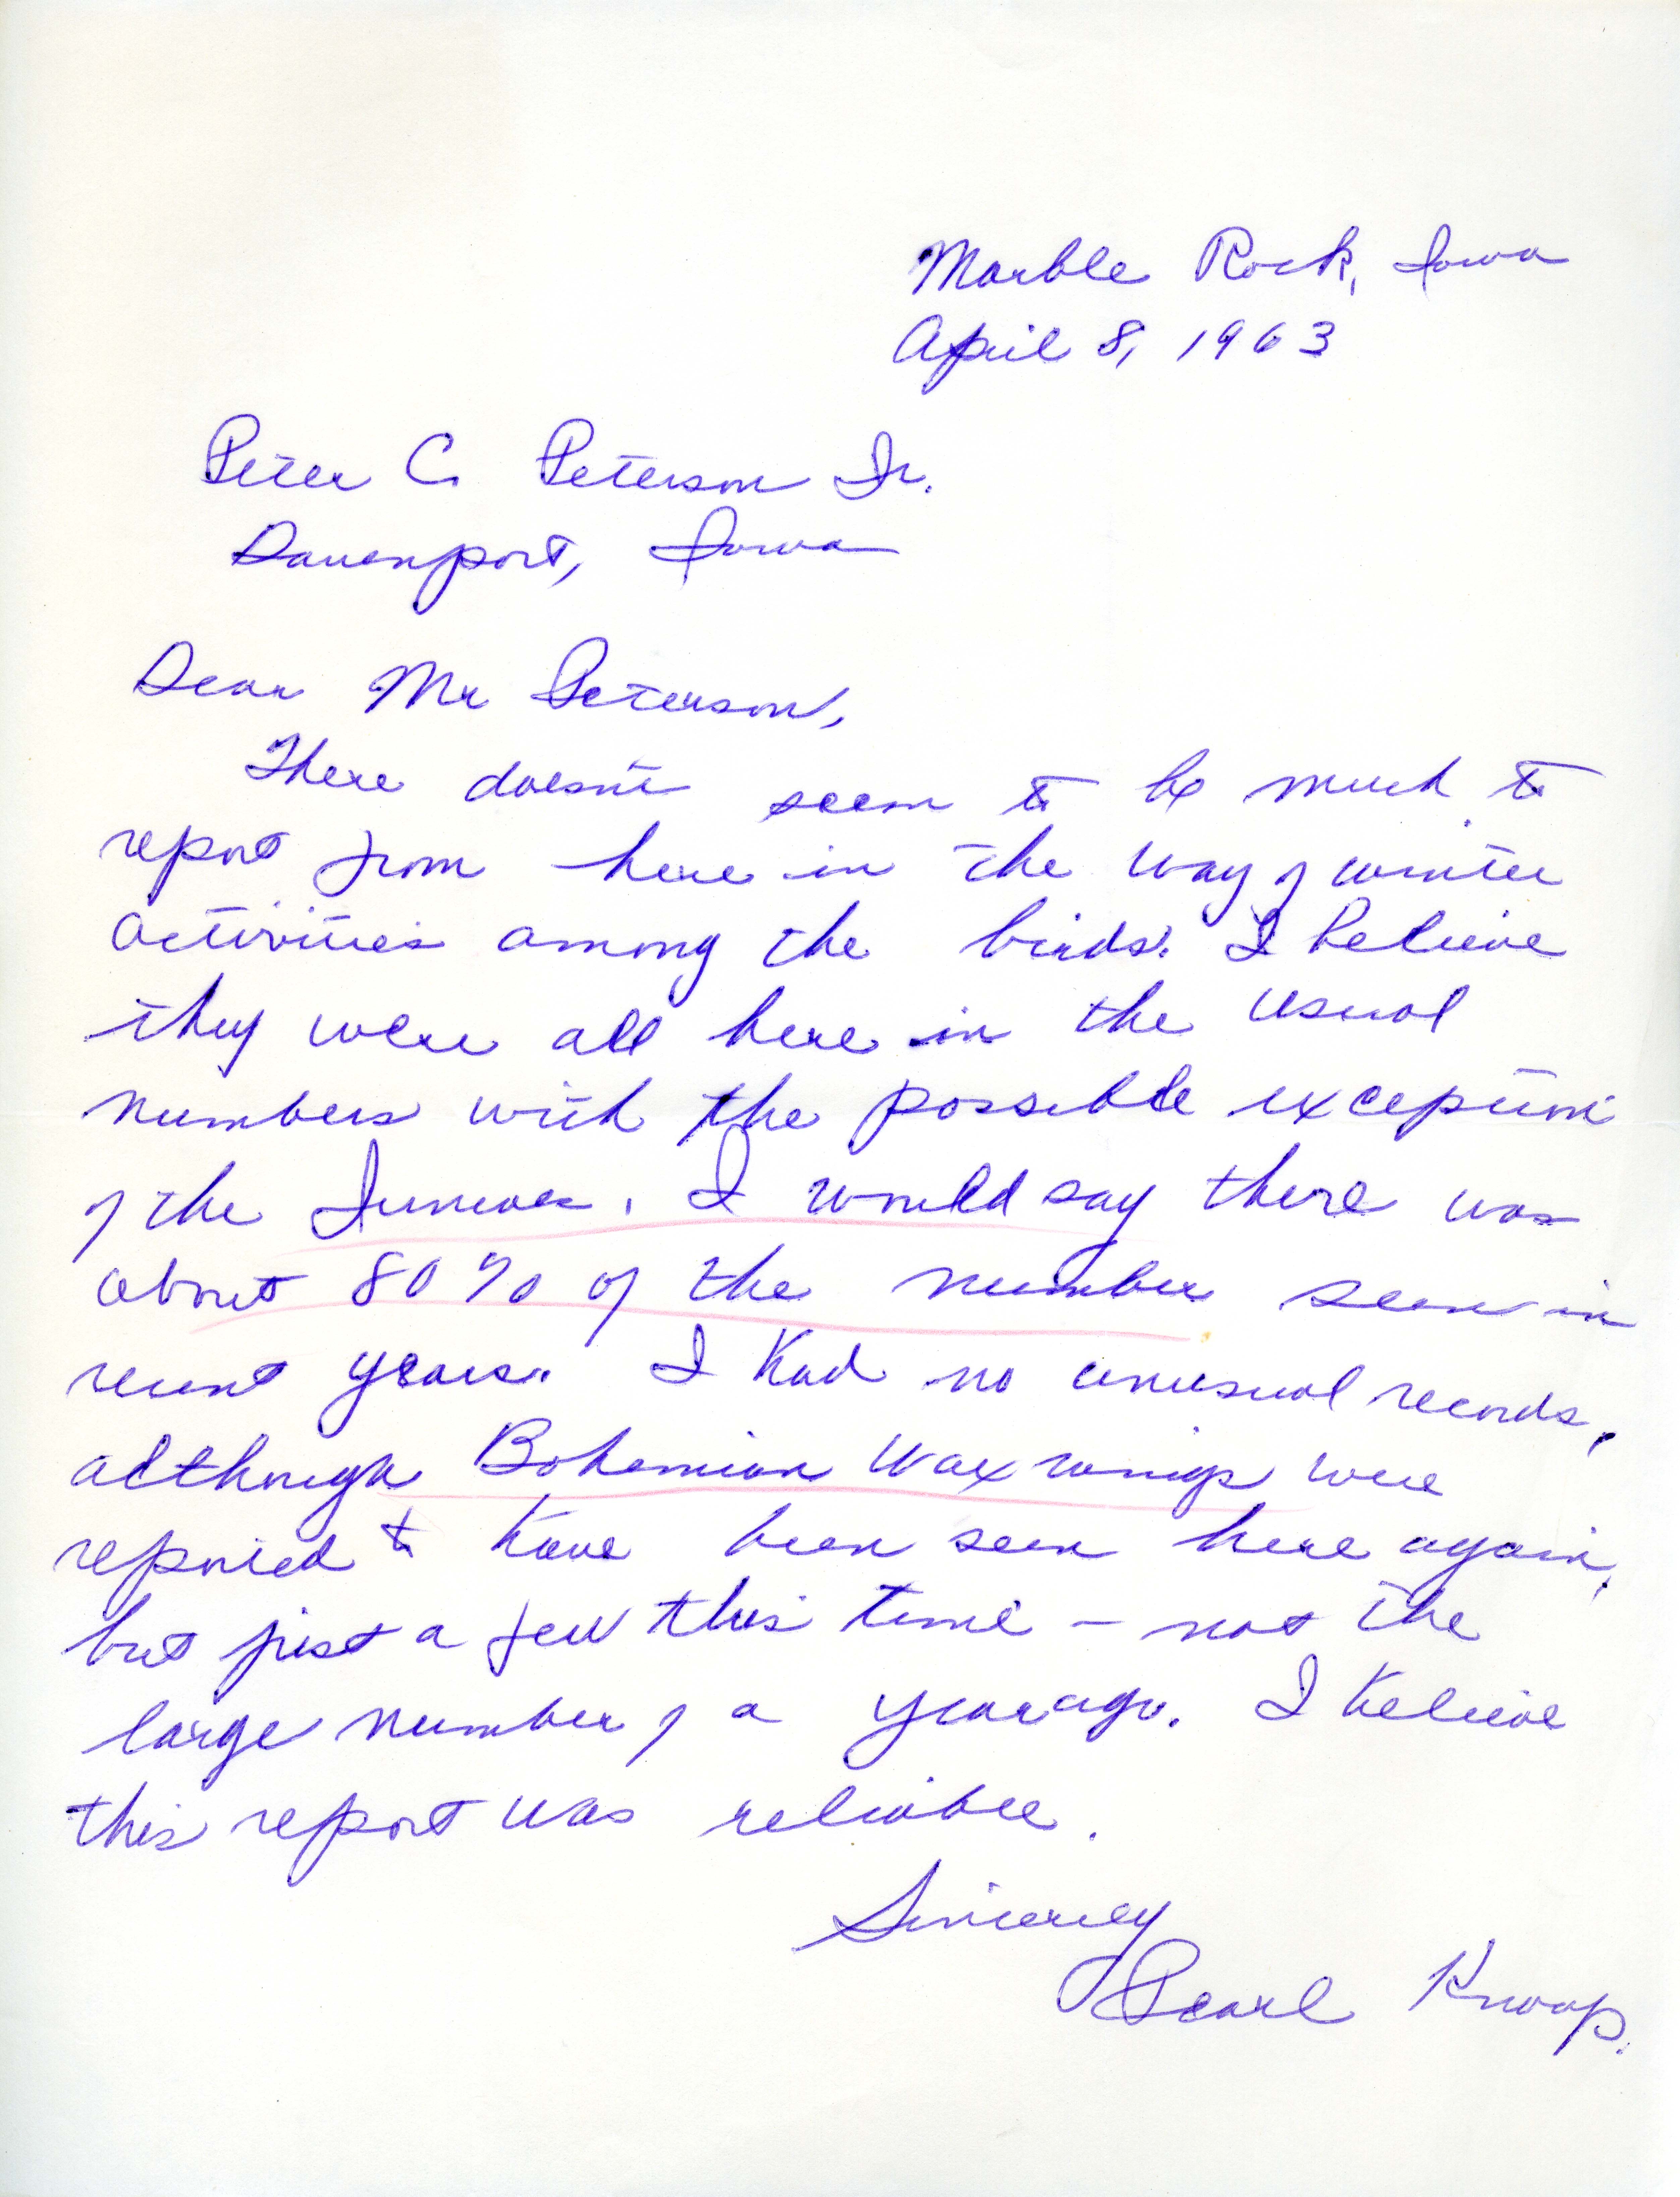 Pearl Knoop letter to Peter C. Petersen regarding field notes, winter 1963